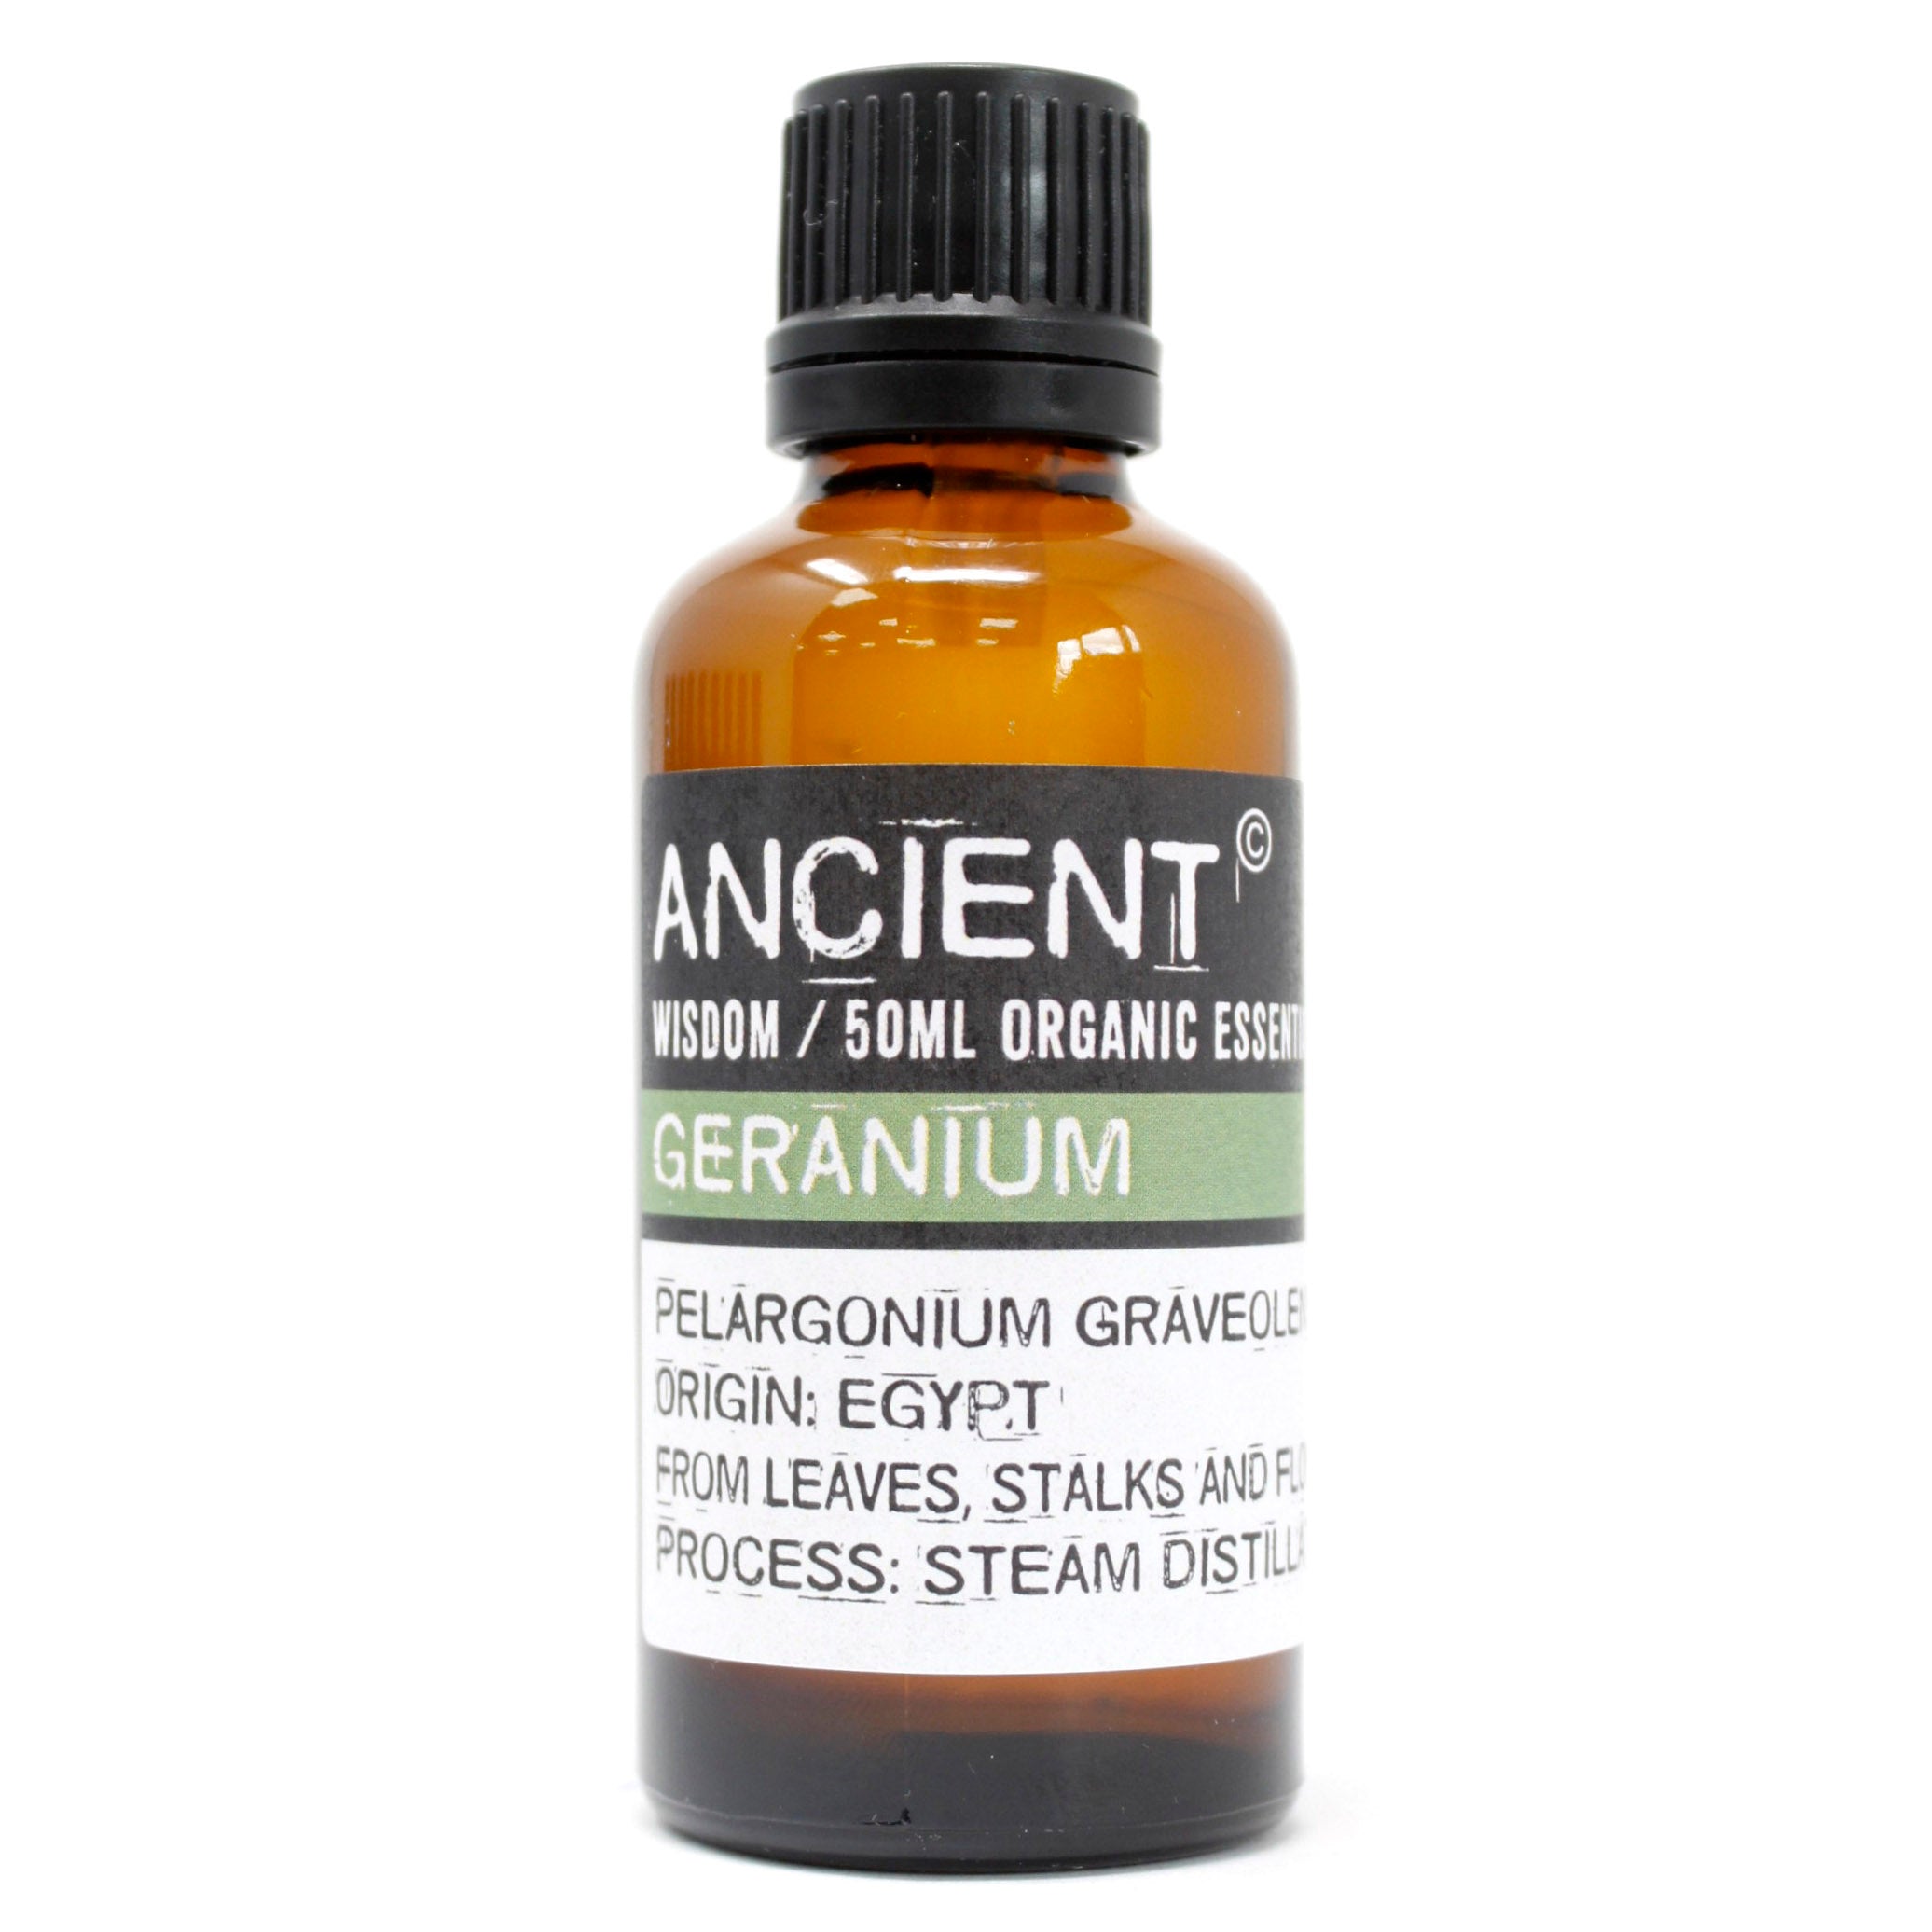 View Geranium Organic Essential Oil 50ml information